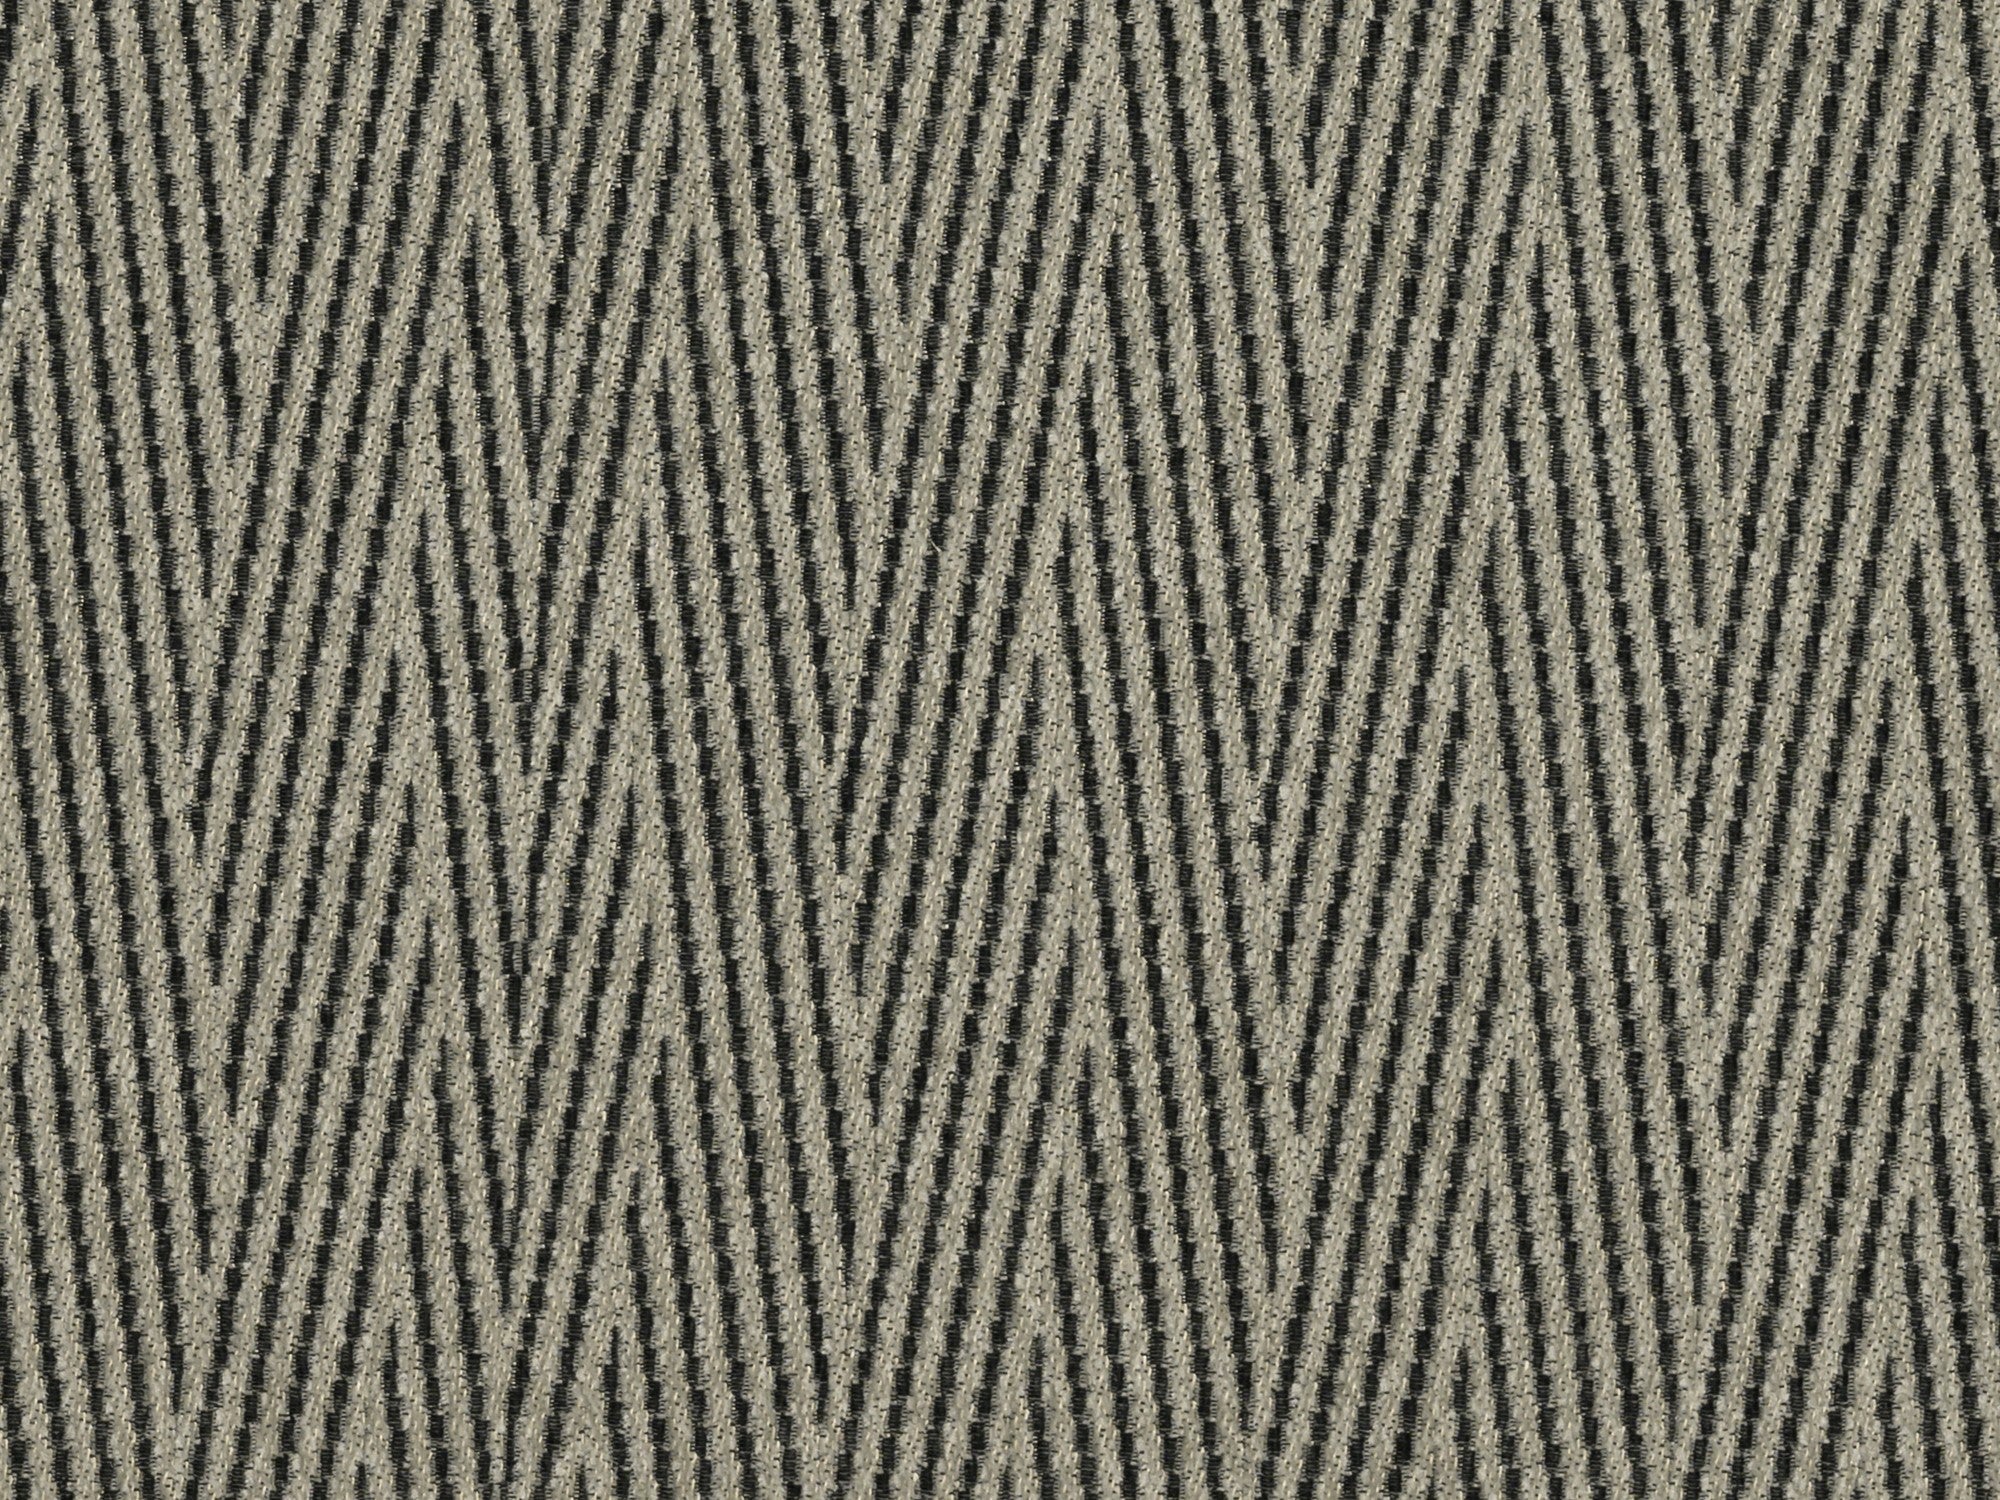 Chevron Black Gray Upholstery Fabric, On Sale